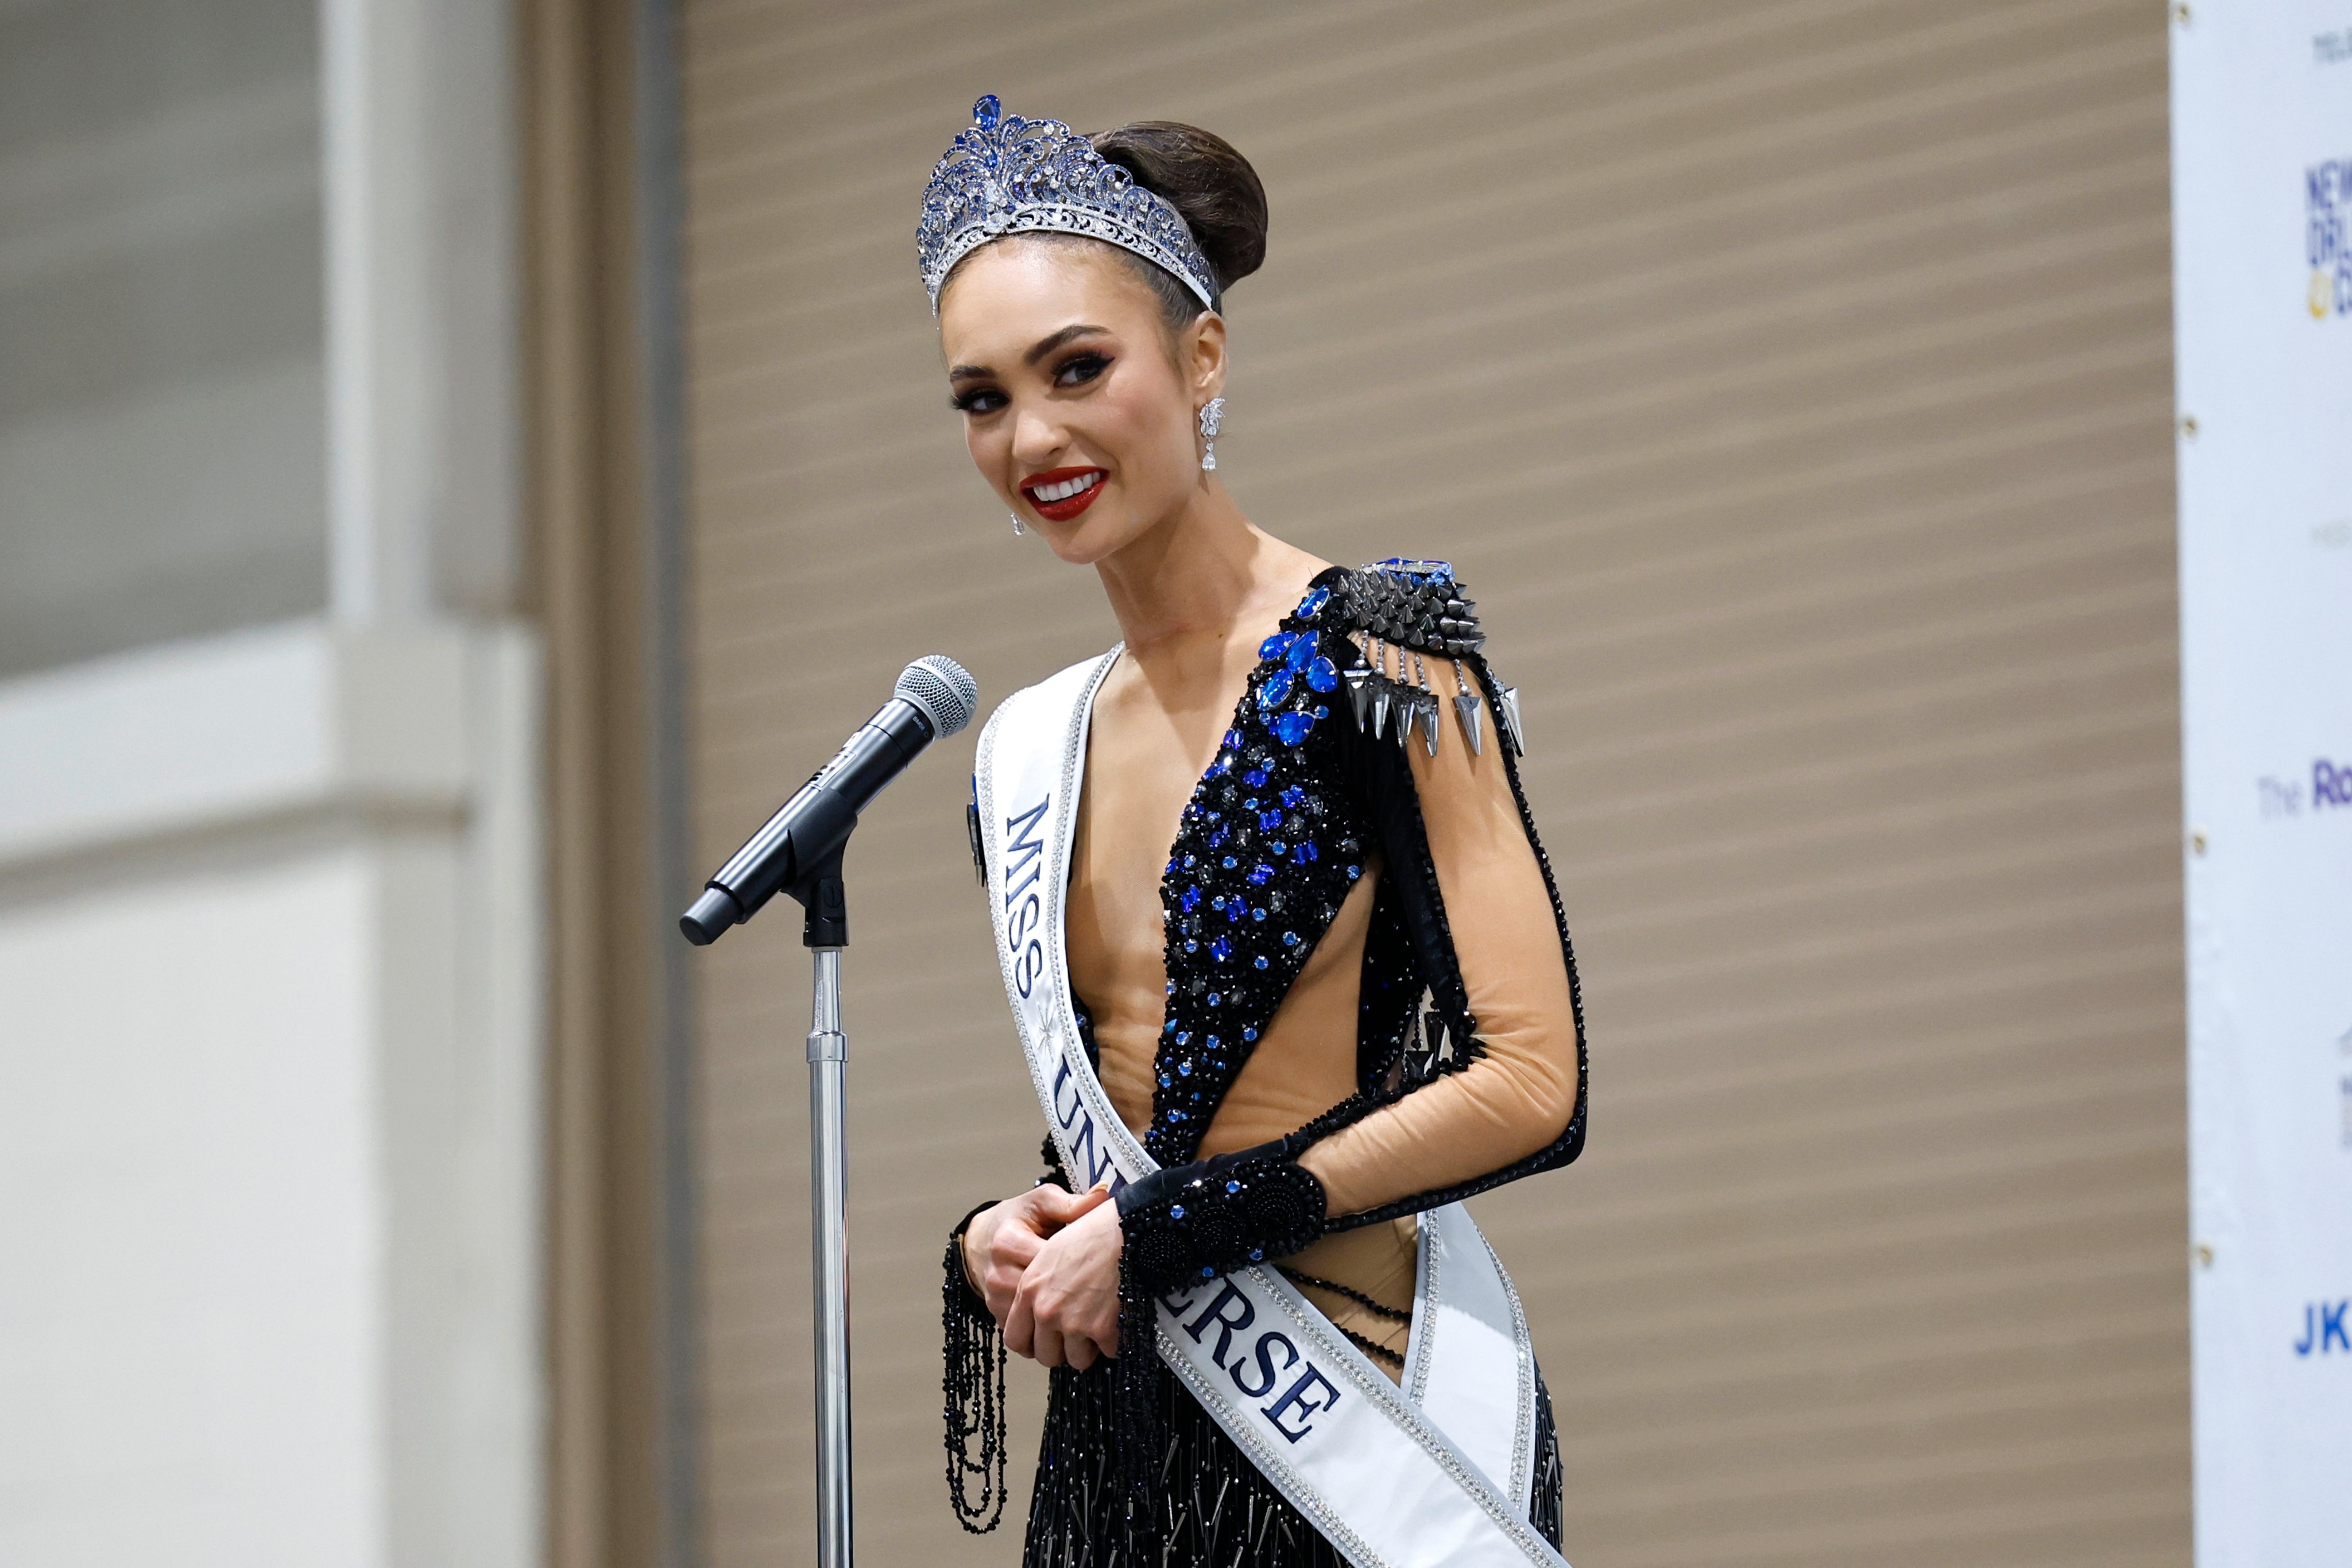 Concorrente Dos Estados Unidos Eleita Miss Universo 2022 Observador